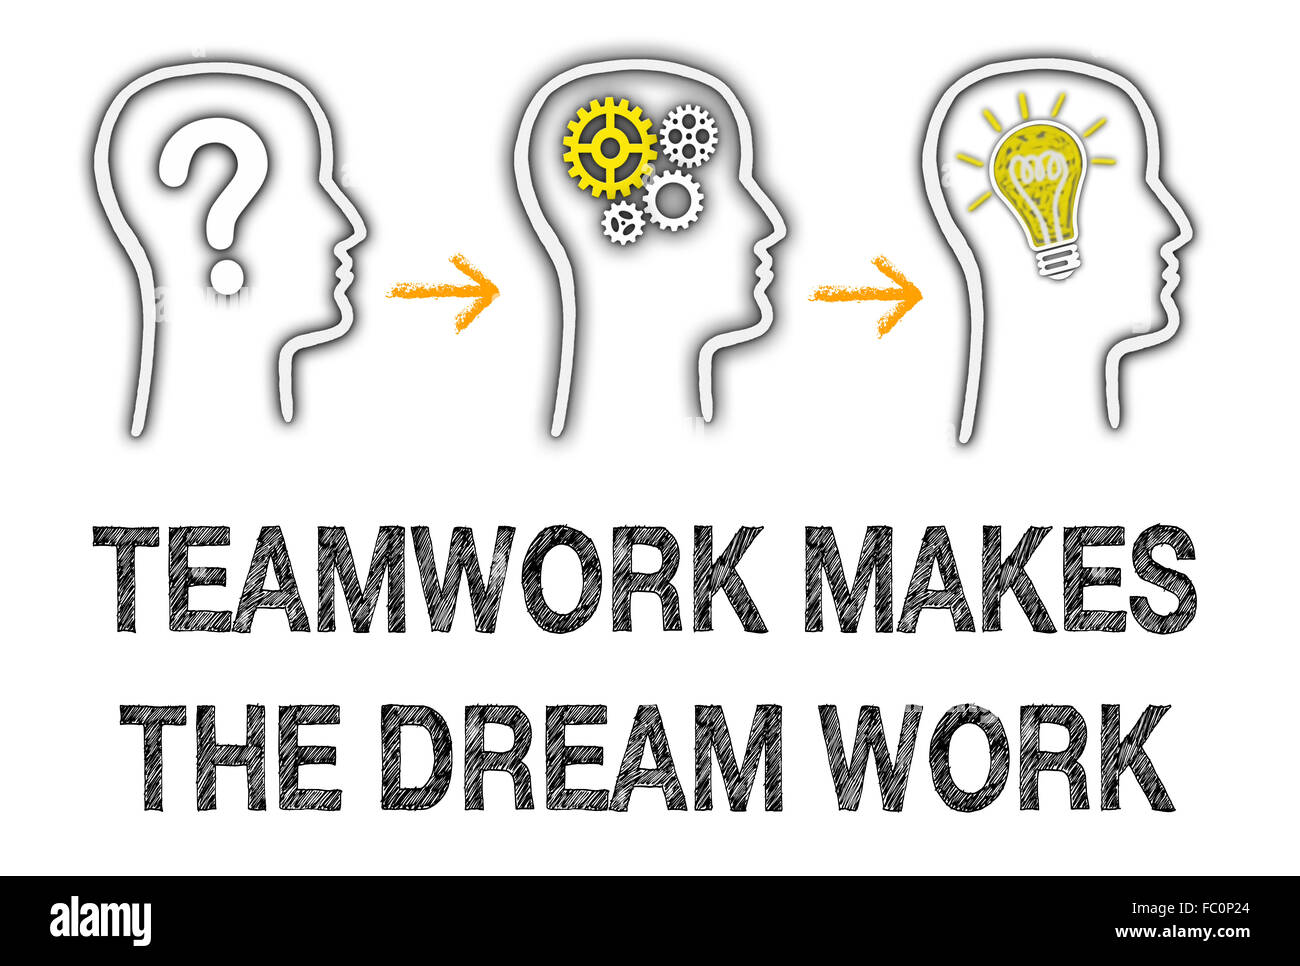 Teamwork makes the dream work Stock Photo